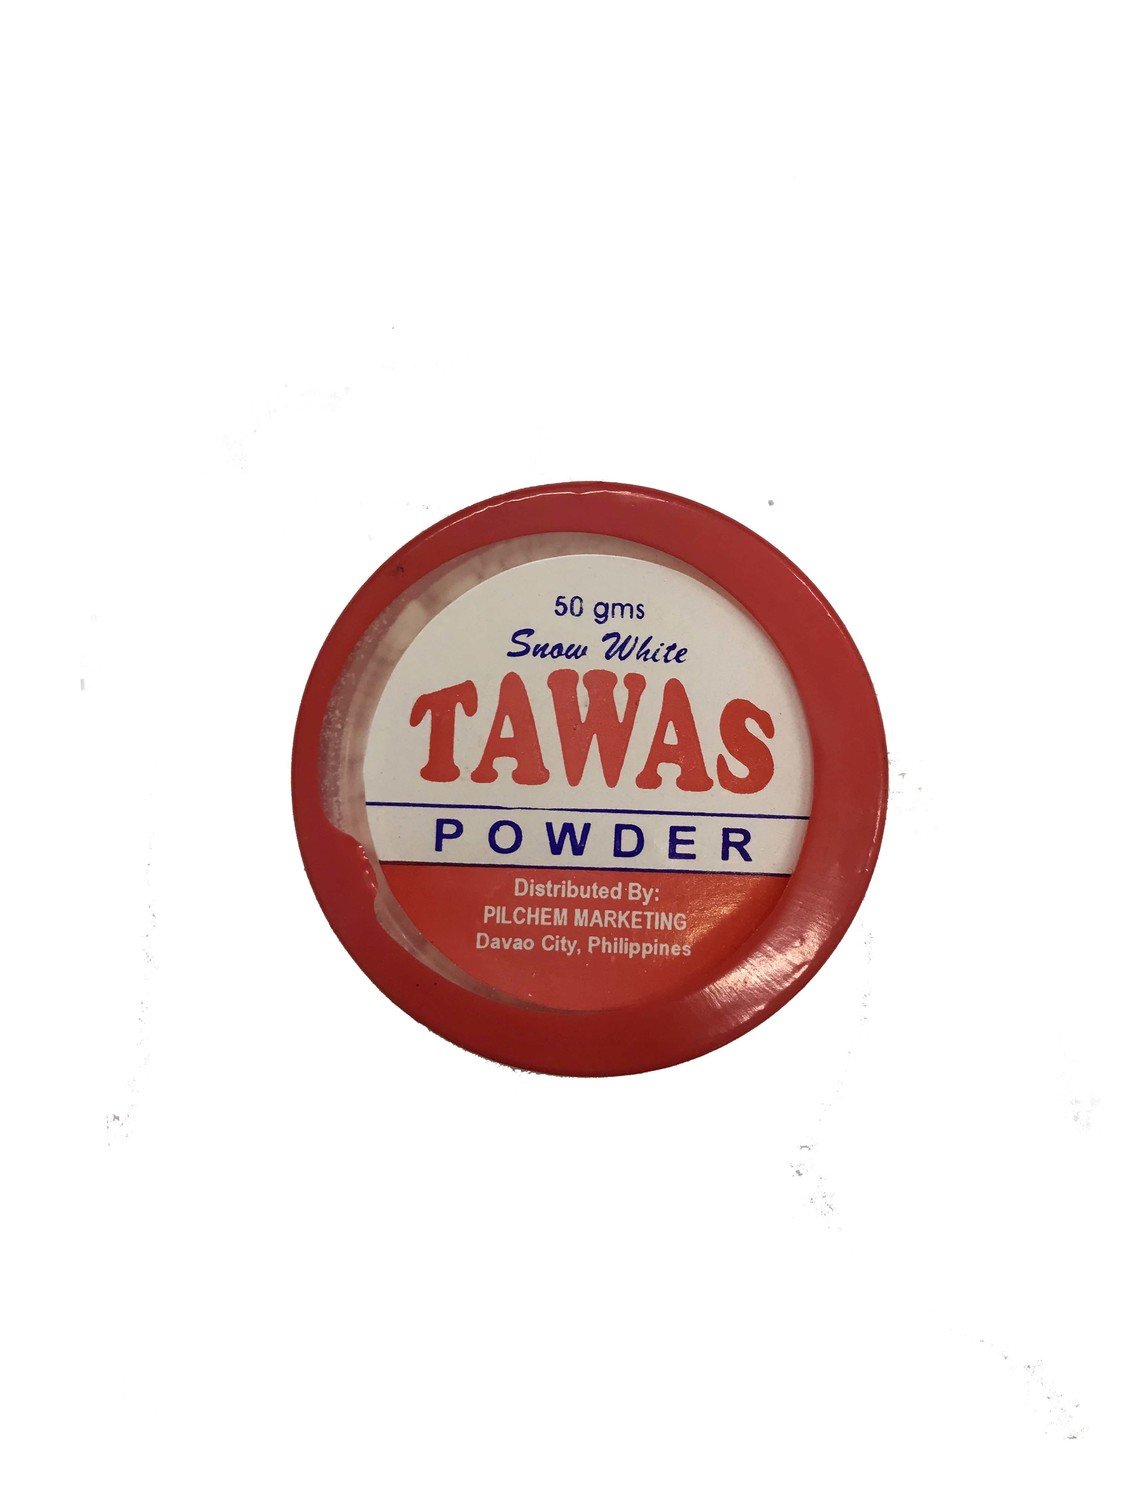 Snow White Tawas Powder 50g